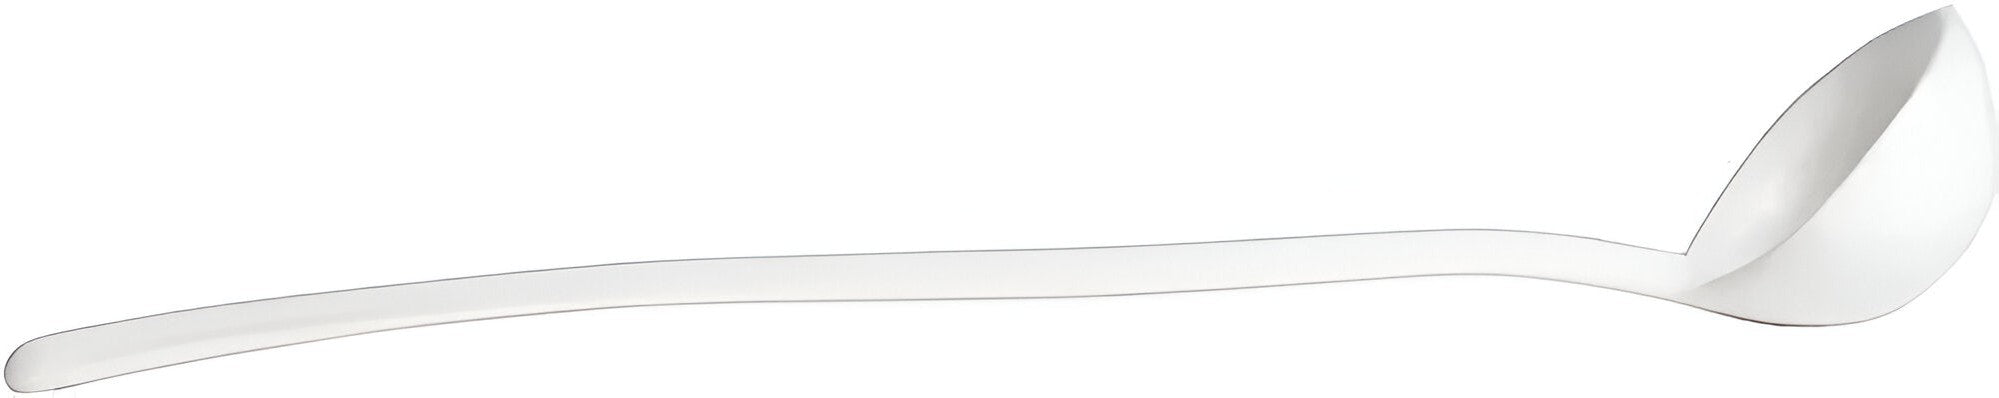 Bugambilia - Mod 4.25 Oz Large White Baja Ladle With Glossy Smooth Finish - SD003-MOD-WW